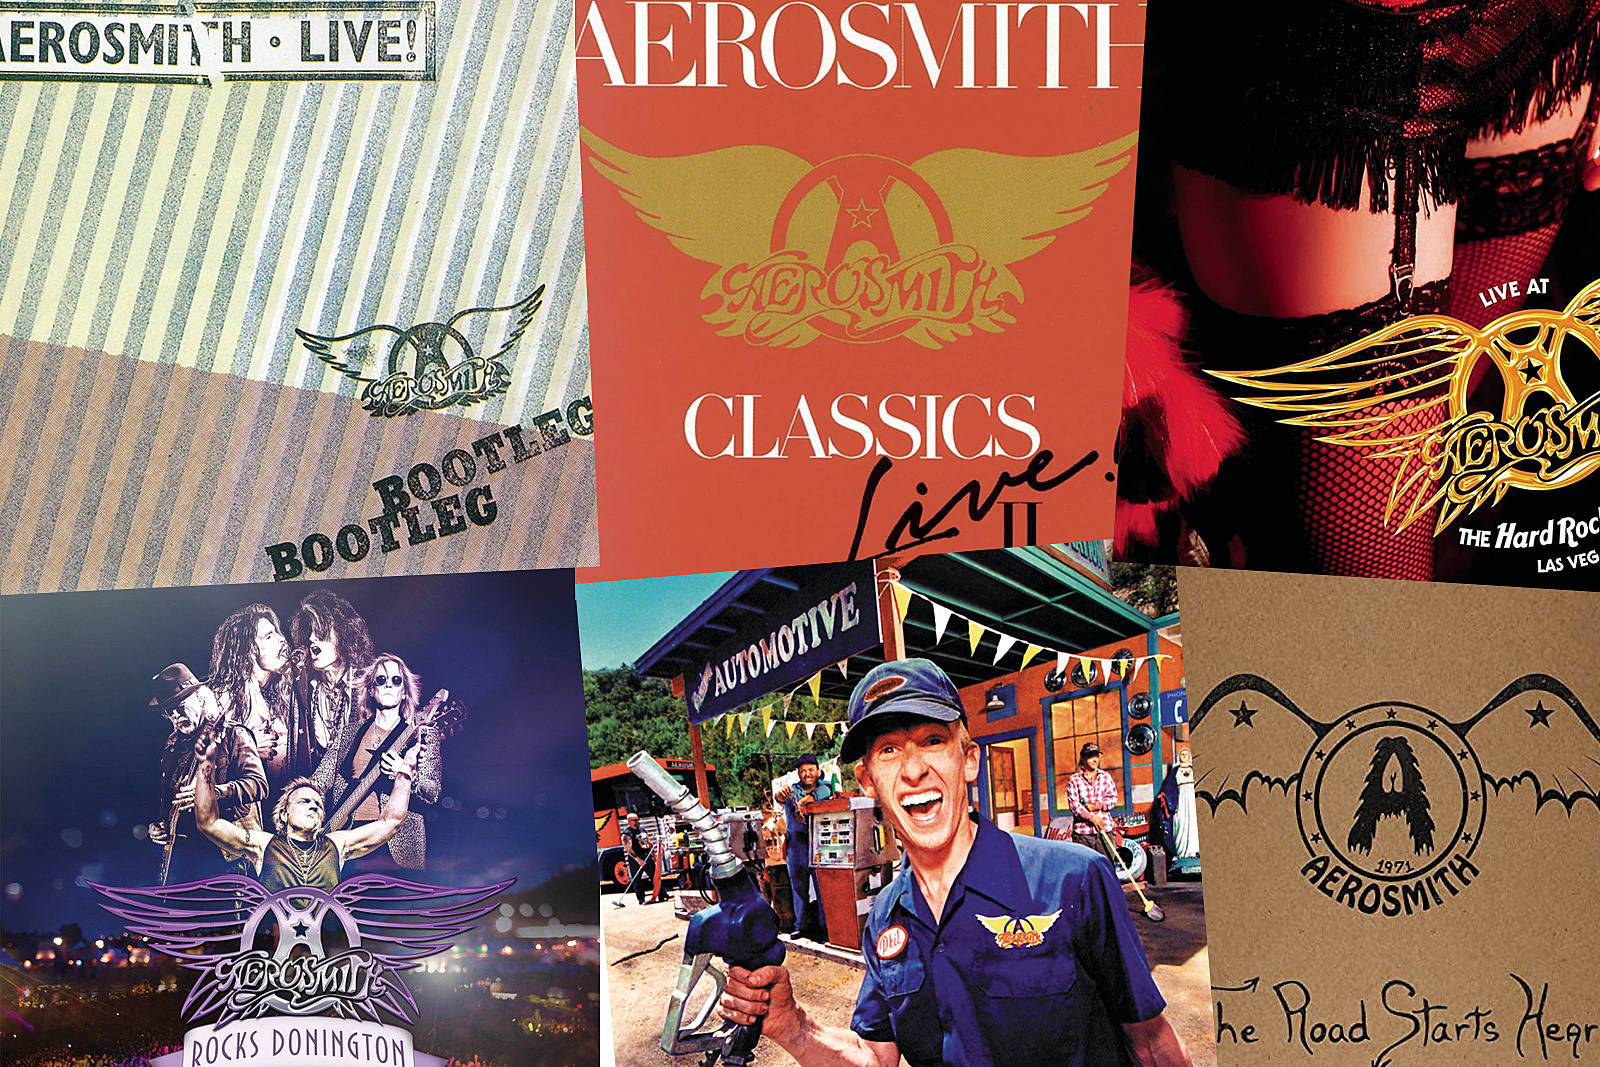 Aerosmith Live Albums Ranked Worst to Best